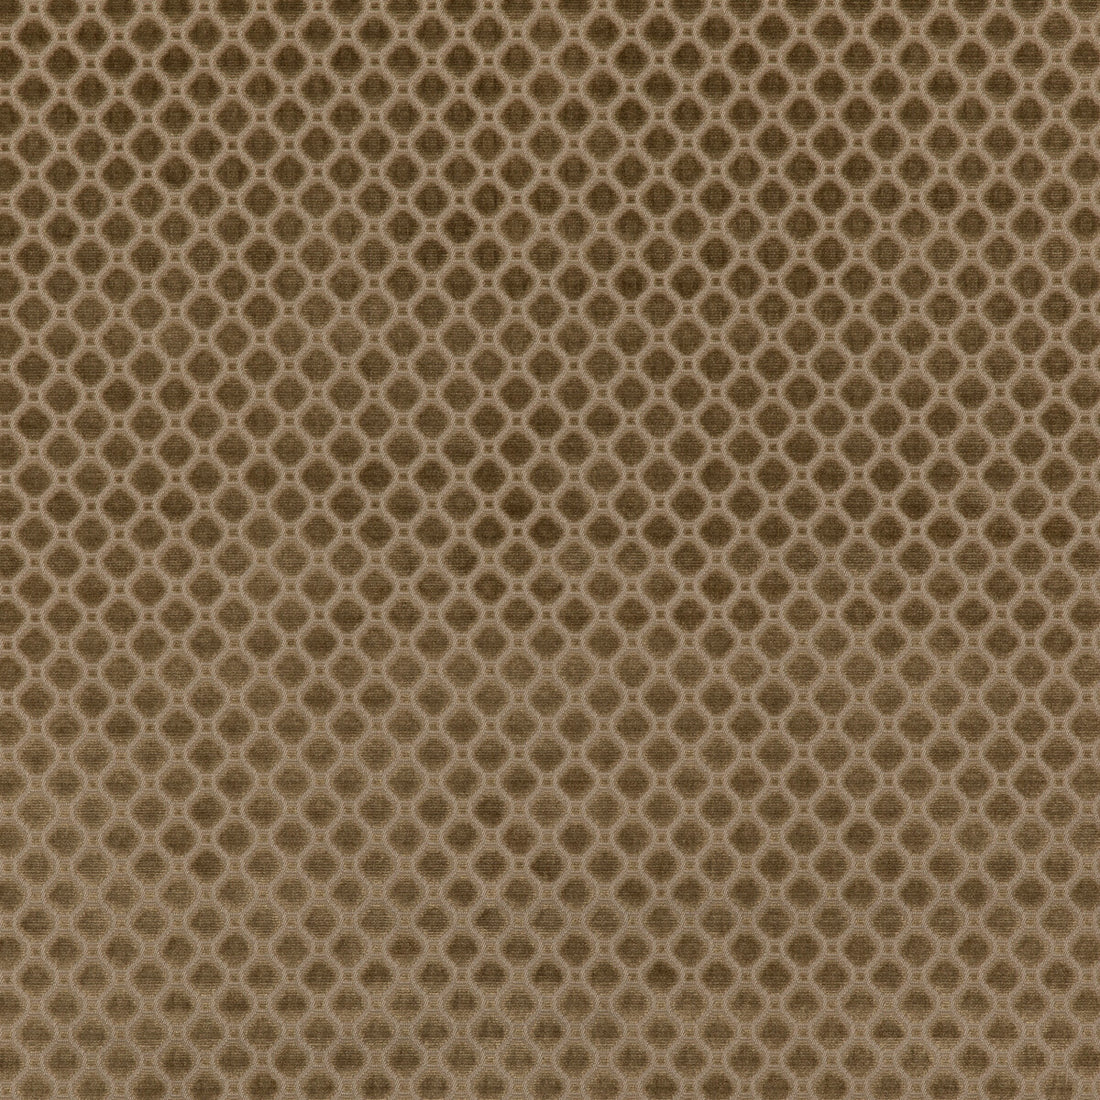 Indus Velvet fabric in mink color - pattern BF10826.285.0 - by G P &amp; J Baker in the Coromandel Velvets collection